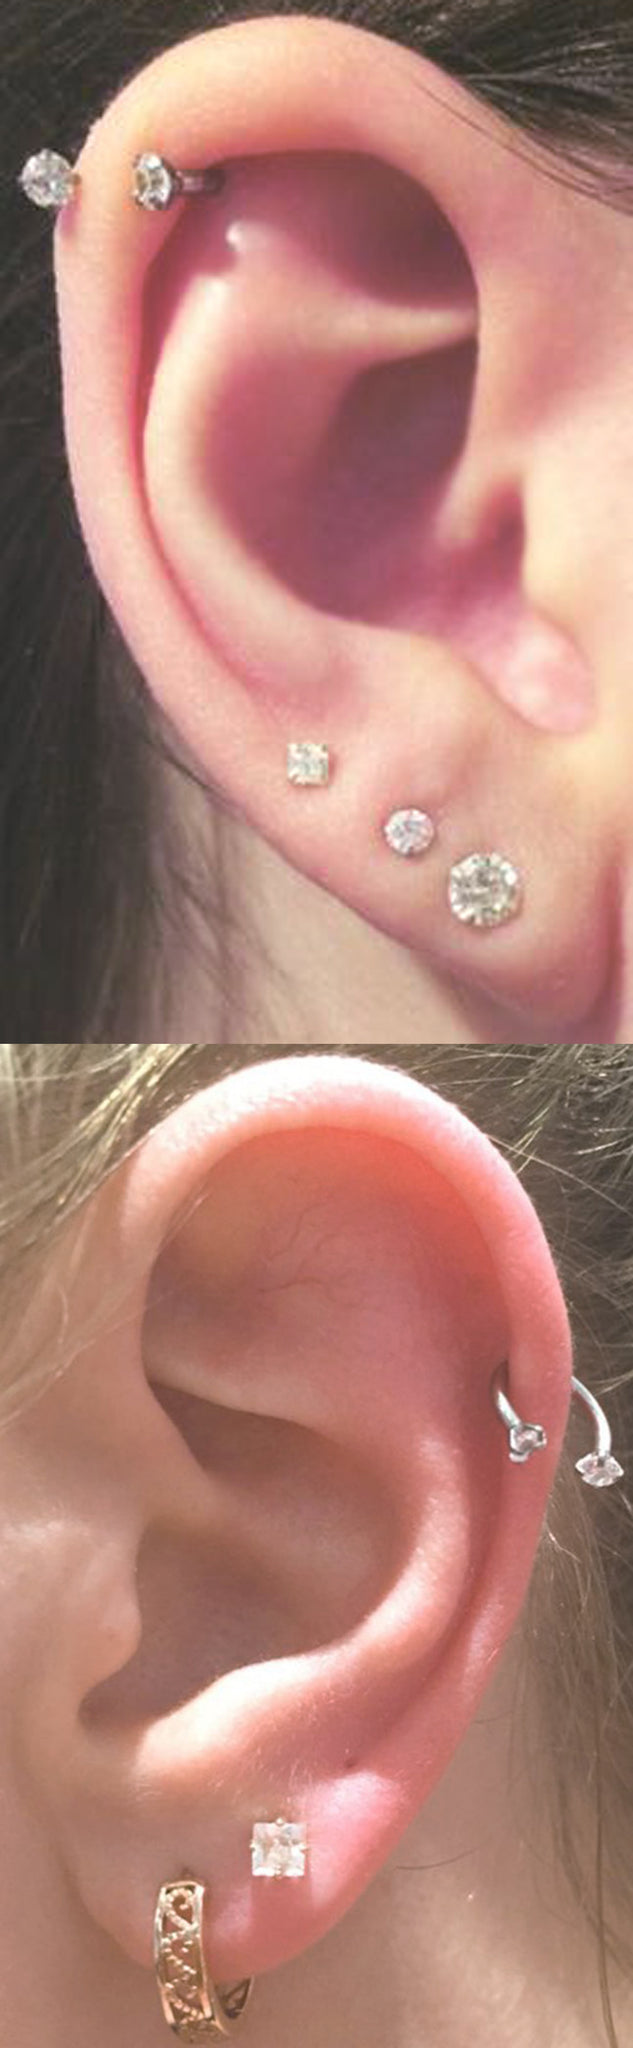 Unique Ear Piercing Ideas Crystal Horseshoe Cartilage Helix Hoops Ring 16G at MyBodiArt.com